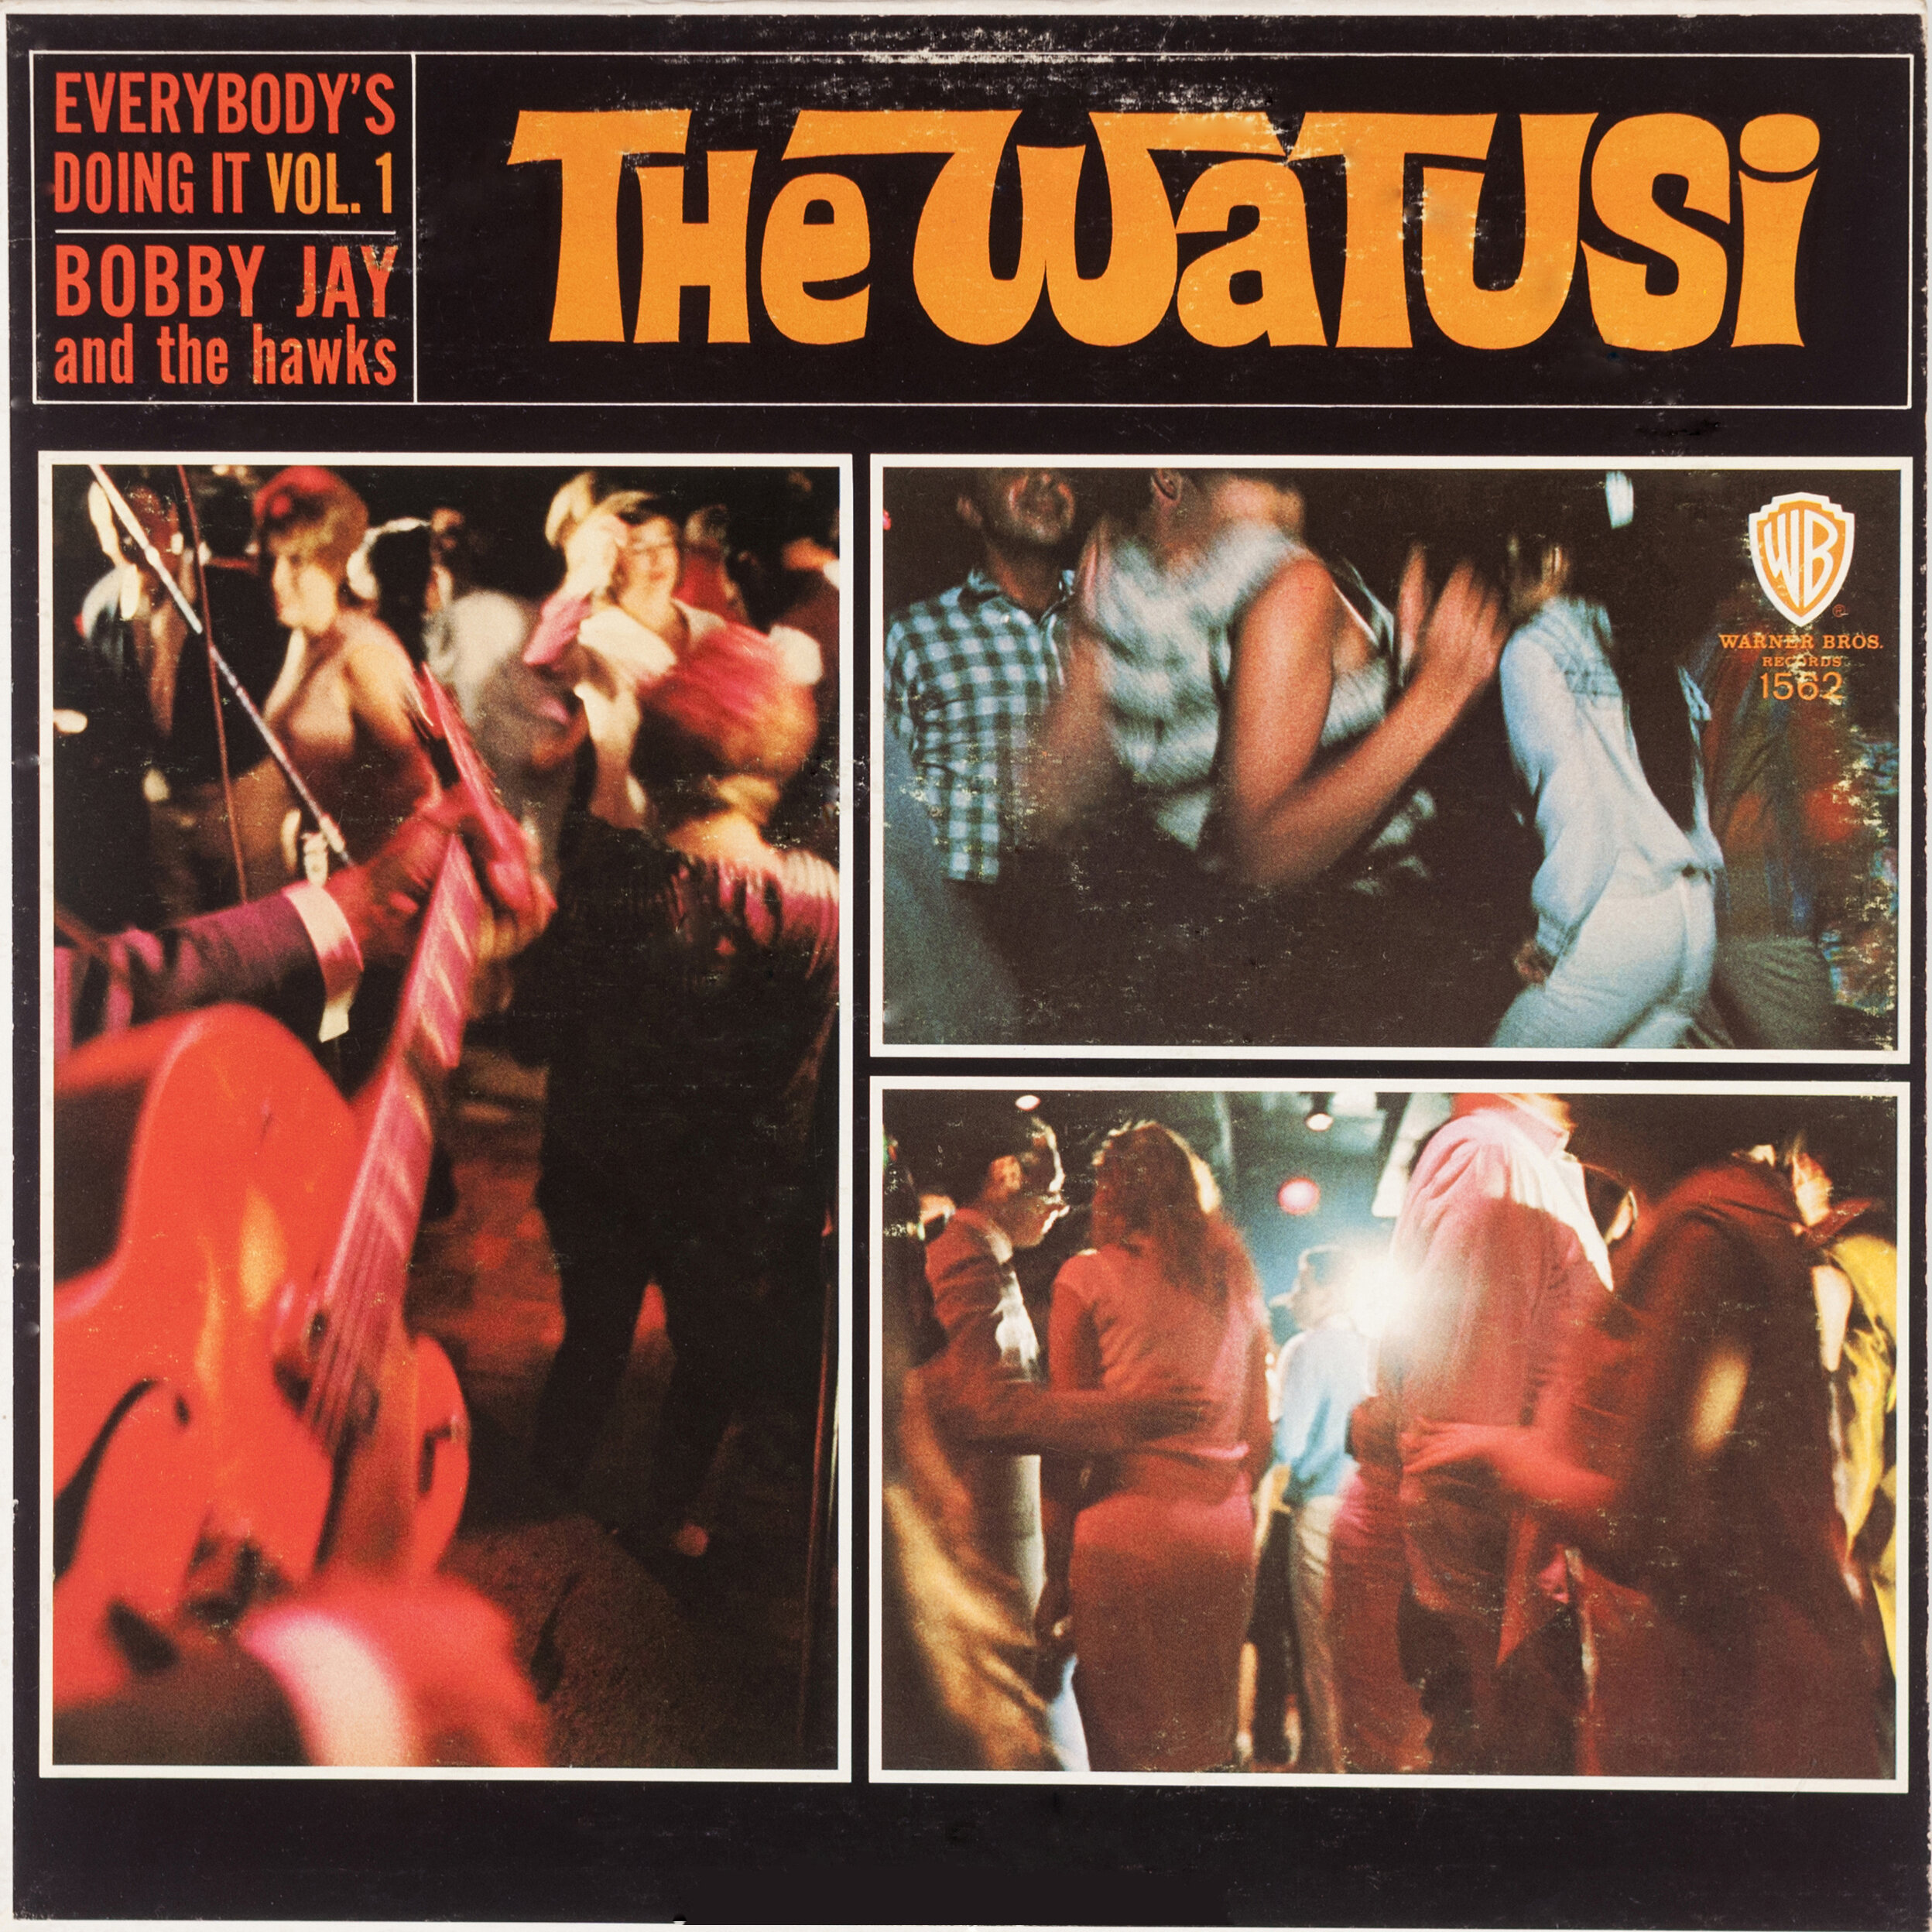 The Watusi - Bobby Jay and the Hawks Album Cover